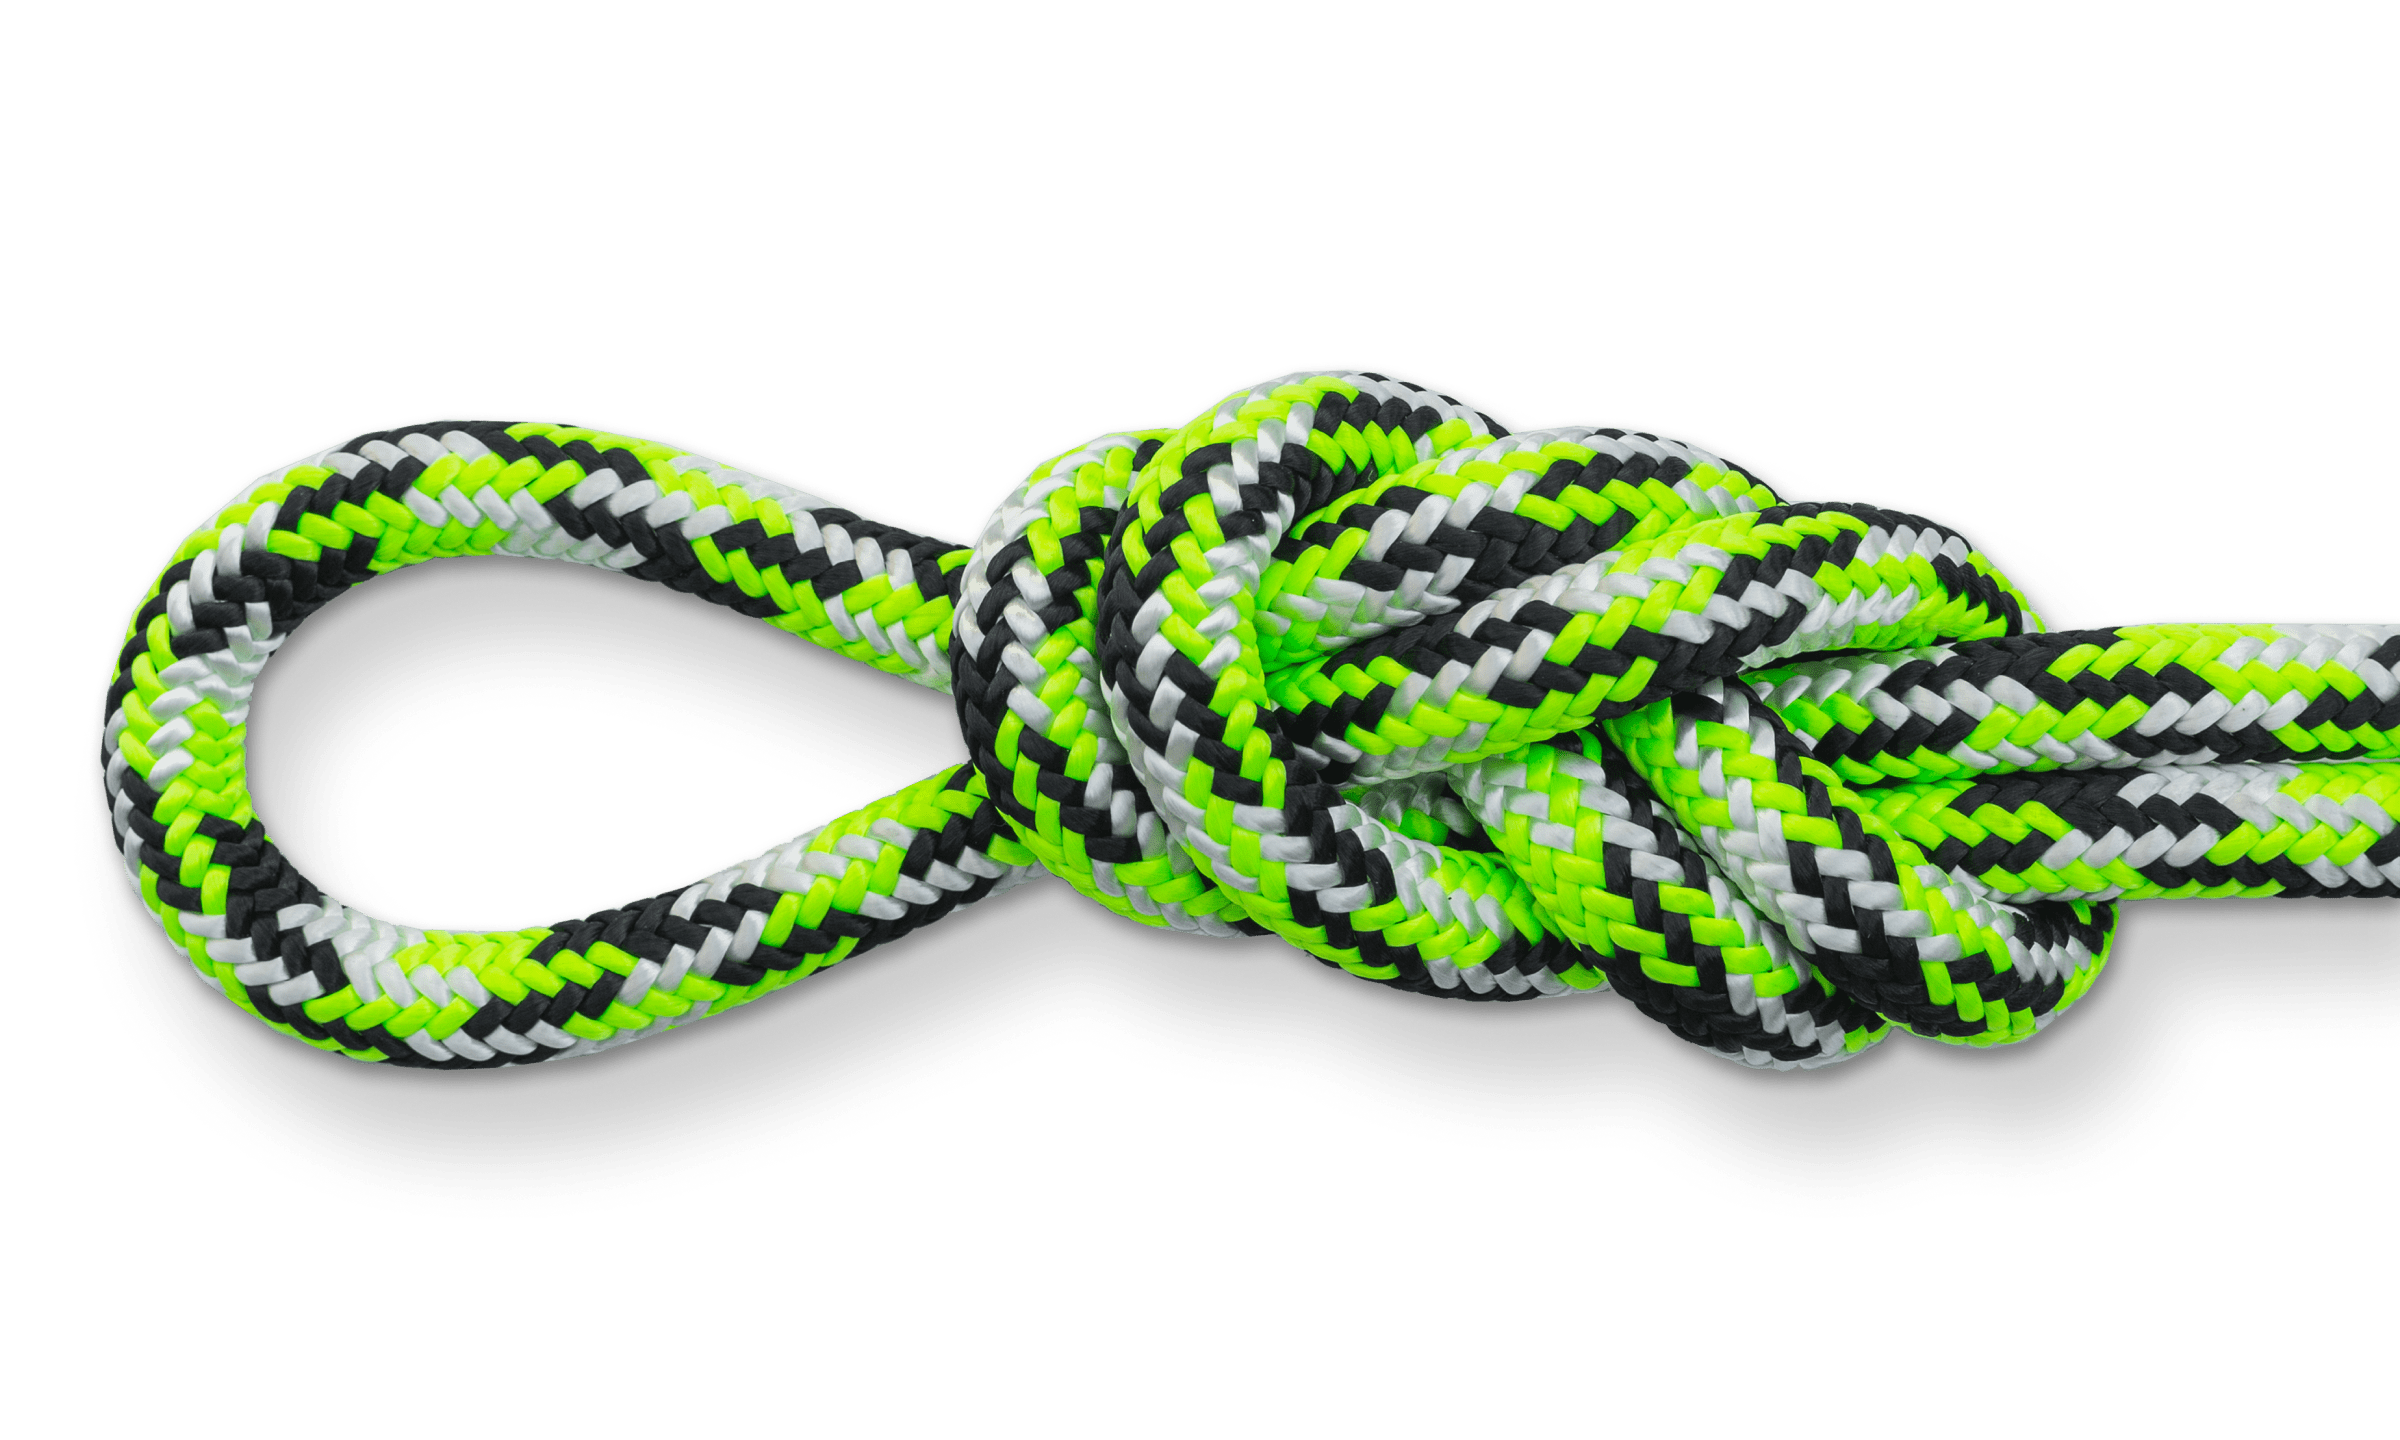 tachyon climbing rope green/blue.black/white double figure eight knot